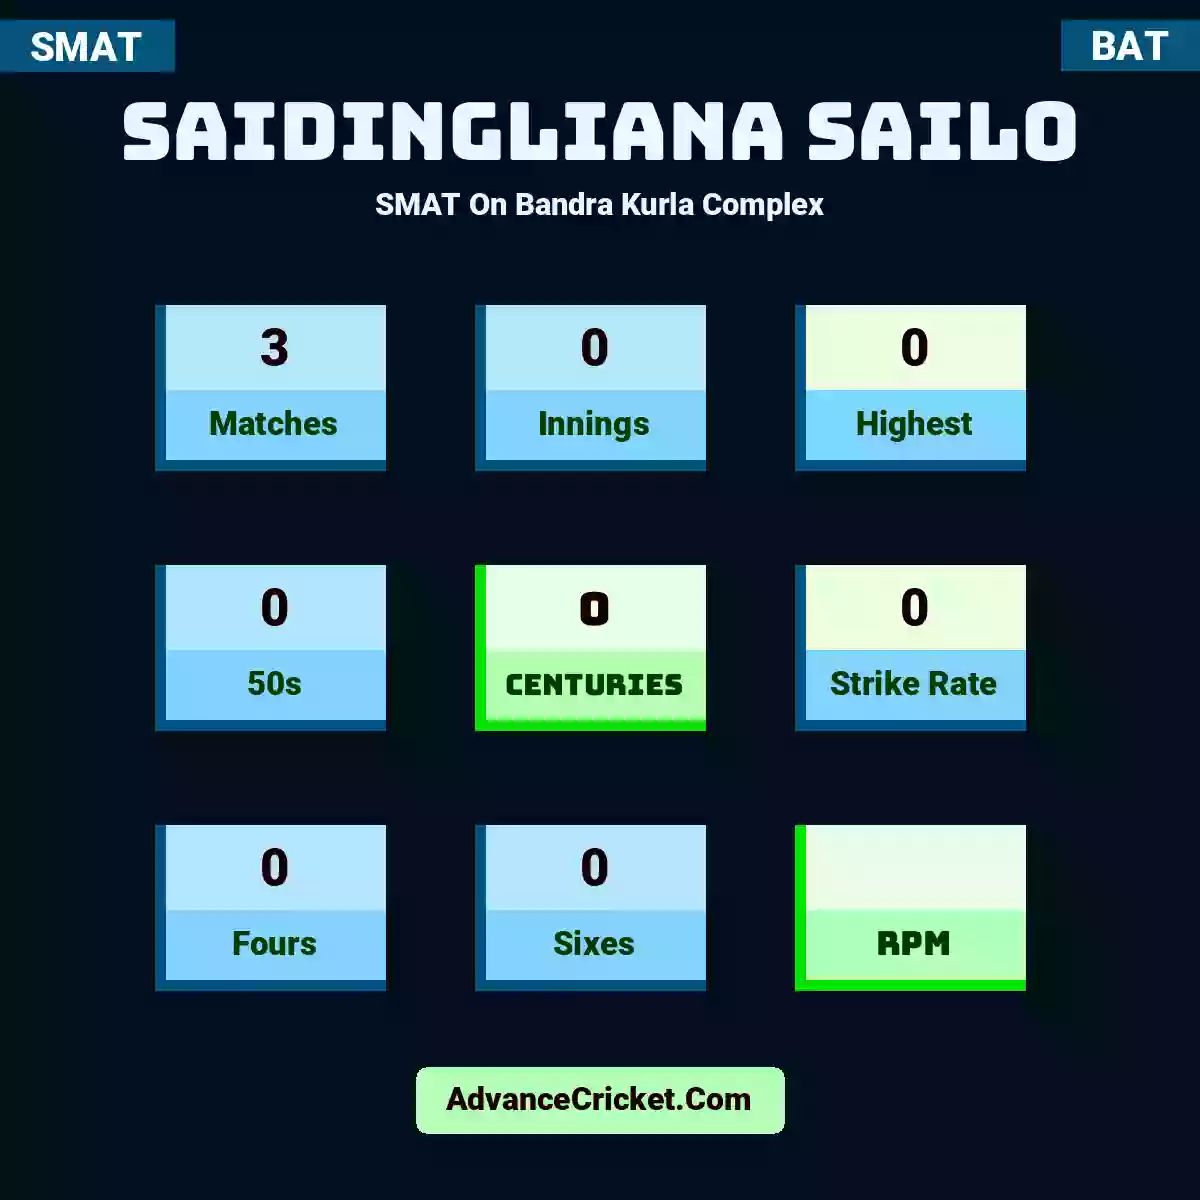 Saidingliana Sailo SMAT  On Bandra Kurla Complex, Saidingliana Sailo played 3 matches, scored 0 runs as highest, 0 half-centuries, and 0 centuries, with a strike rate of 0. S.Sailo hit 0 fours and 0 sixes.